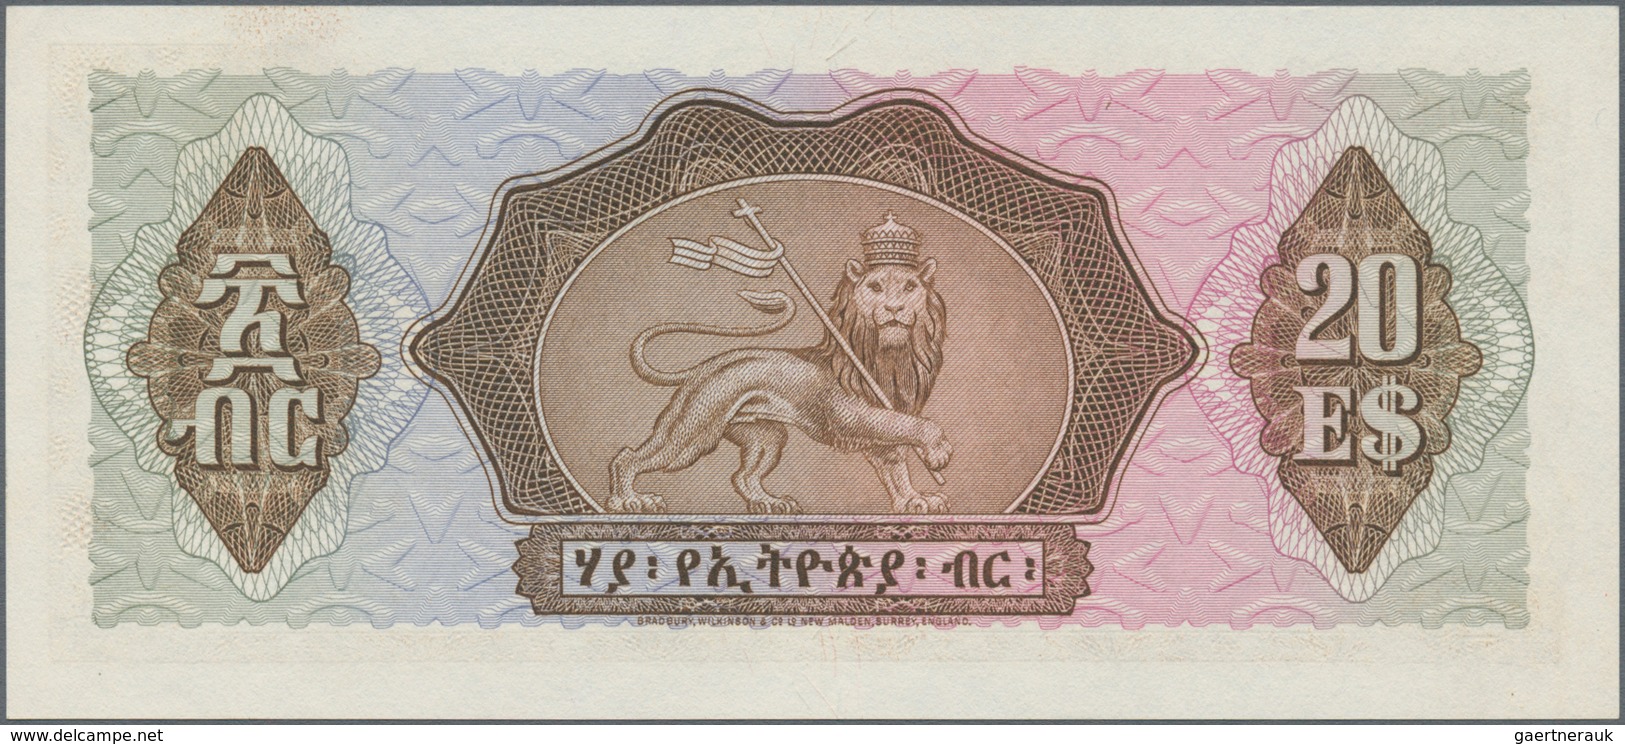 Ethiopia / Äthiopien: State Bank Of Ethiopia 20 Dollars ND(1961), P.21a In Perfect UNC Condition. Ra - Aethiopien